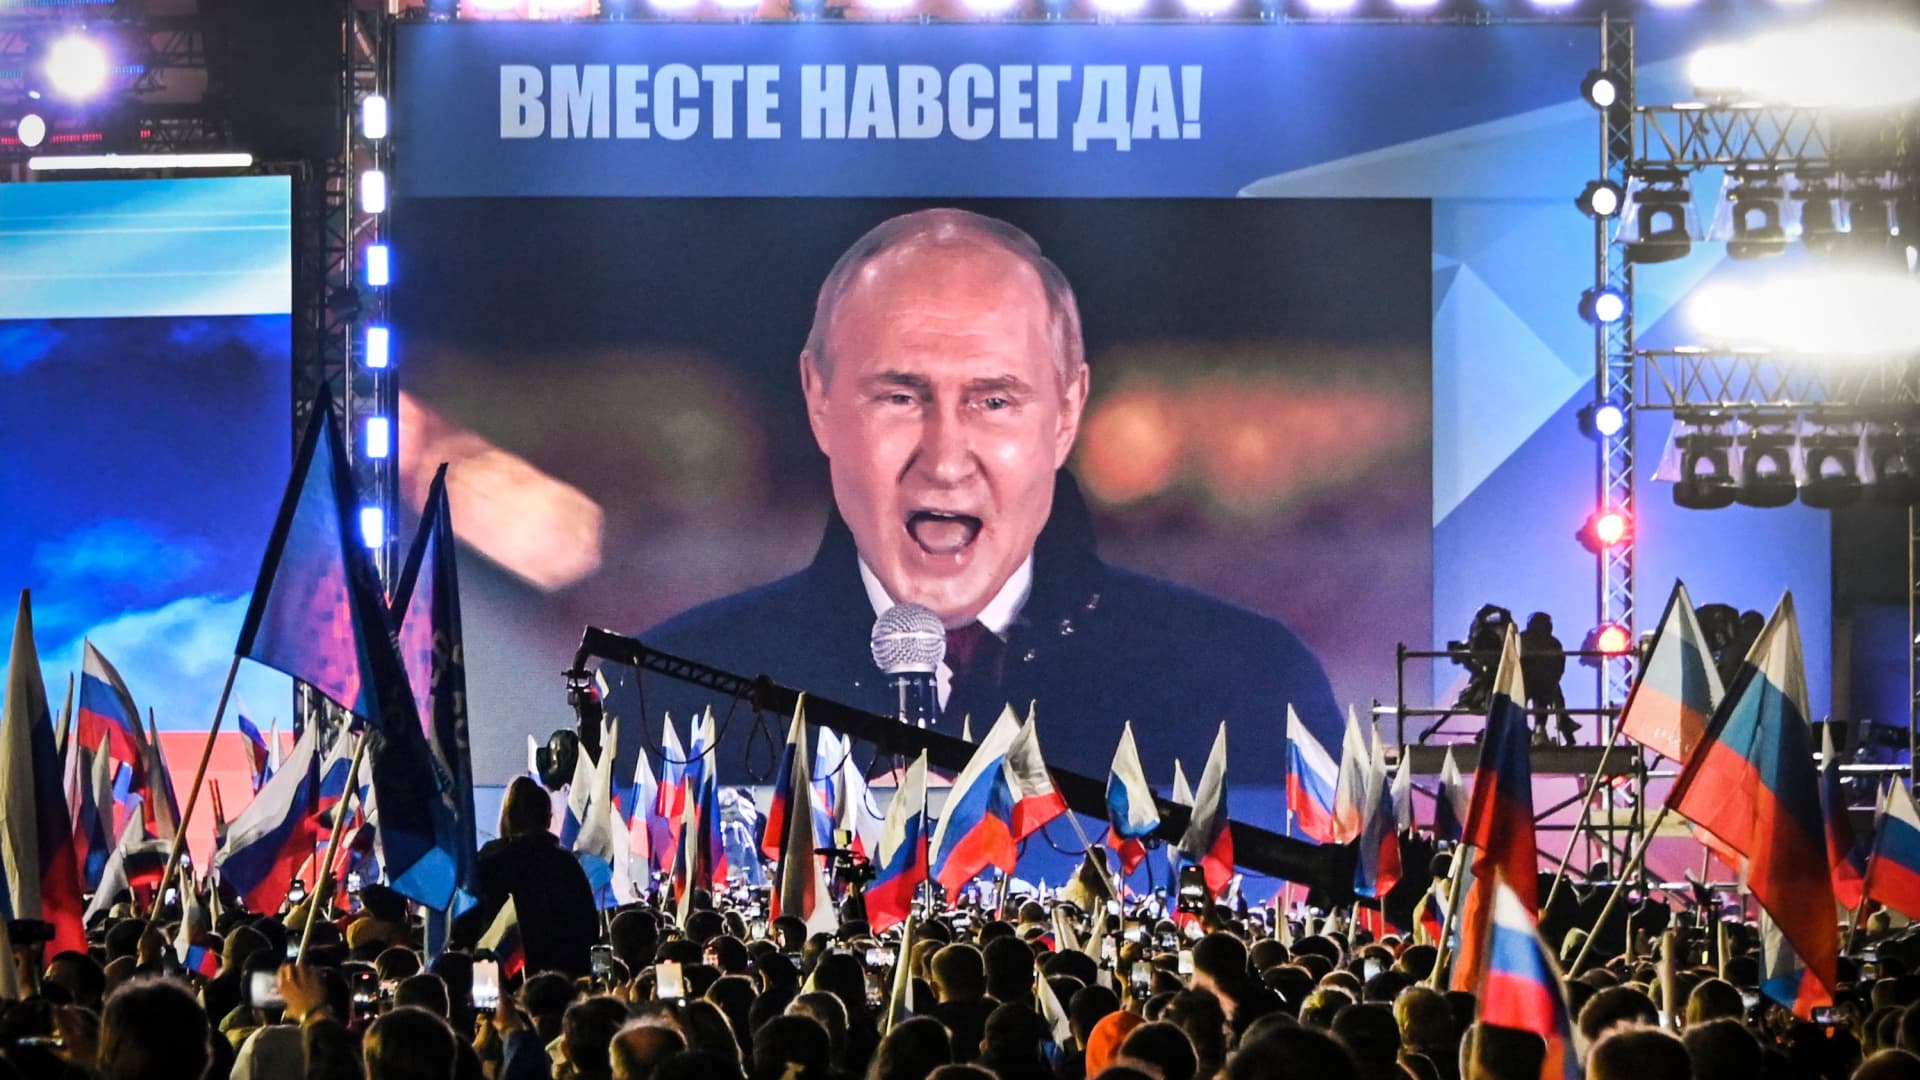 Putin's supporters call for the liquidation of Ukraine as 'genocidal rhetoric' swells